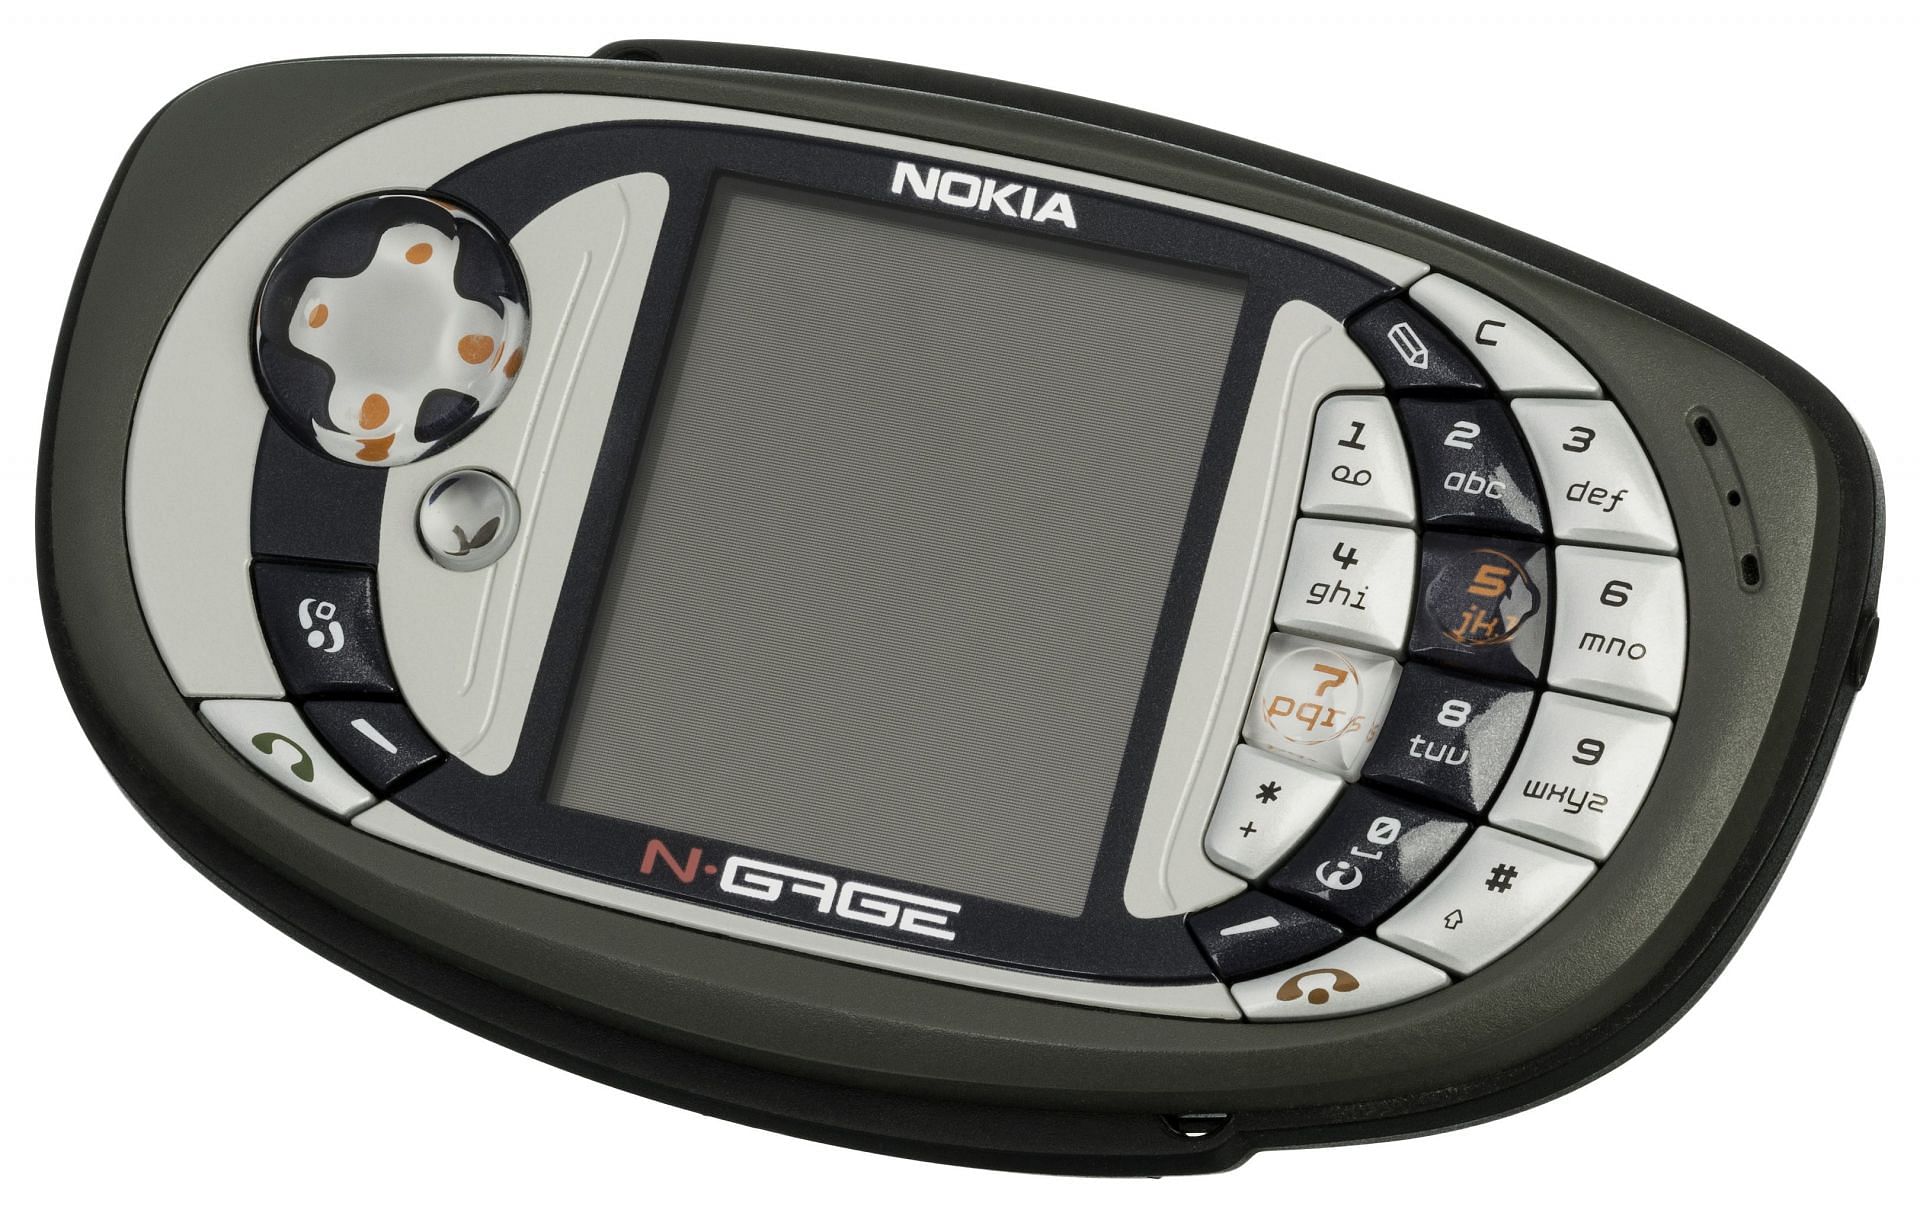 Nokia N-Gage QD (Image via Wikipedia)